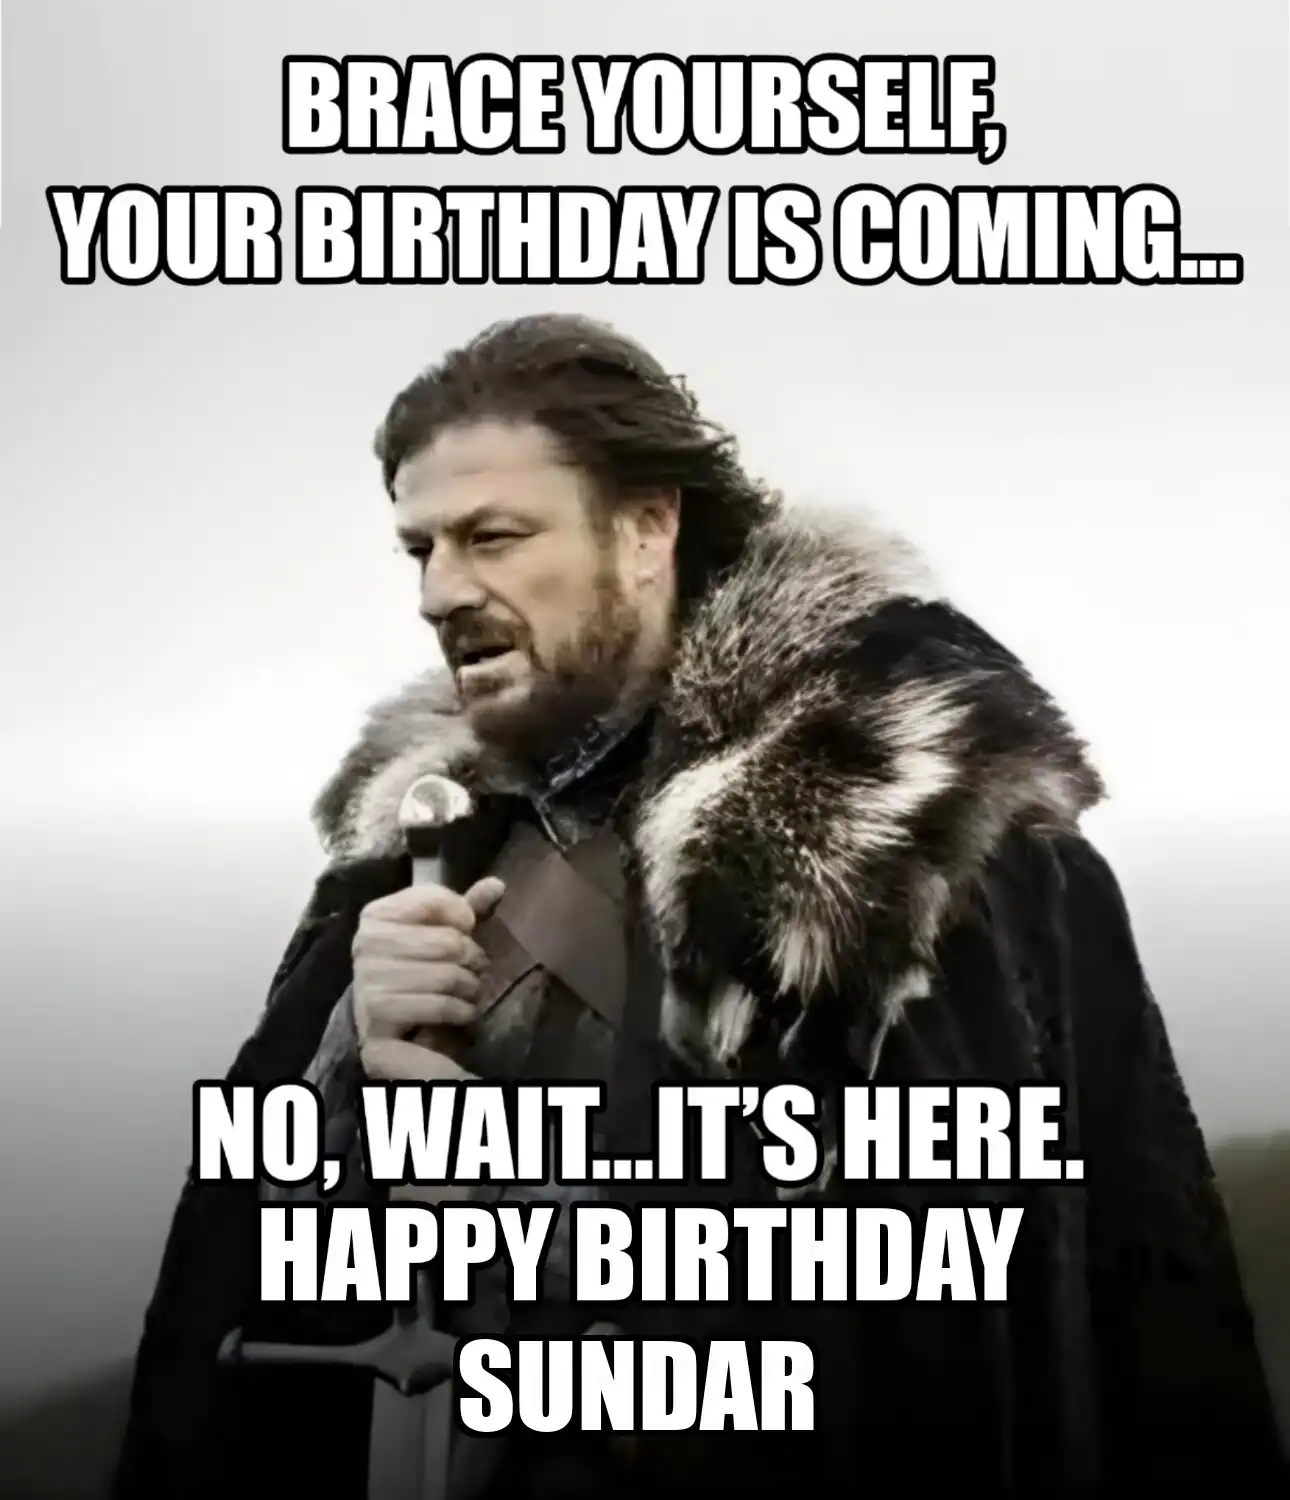 Happy Birthday Sundar Brace Yourself Your Birthday Is Coming Meme